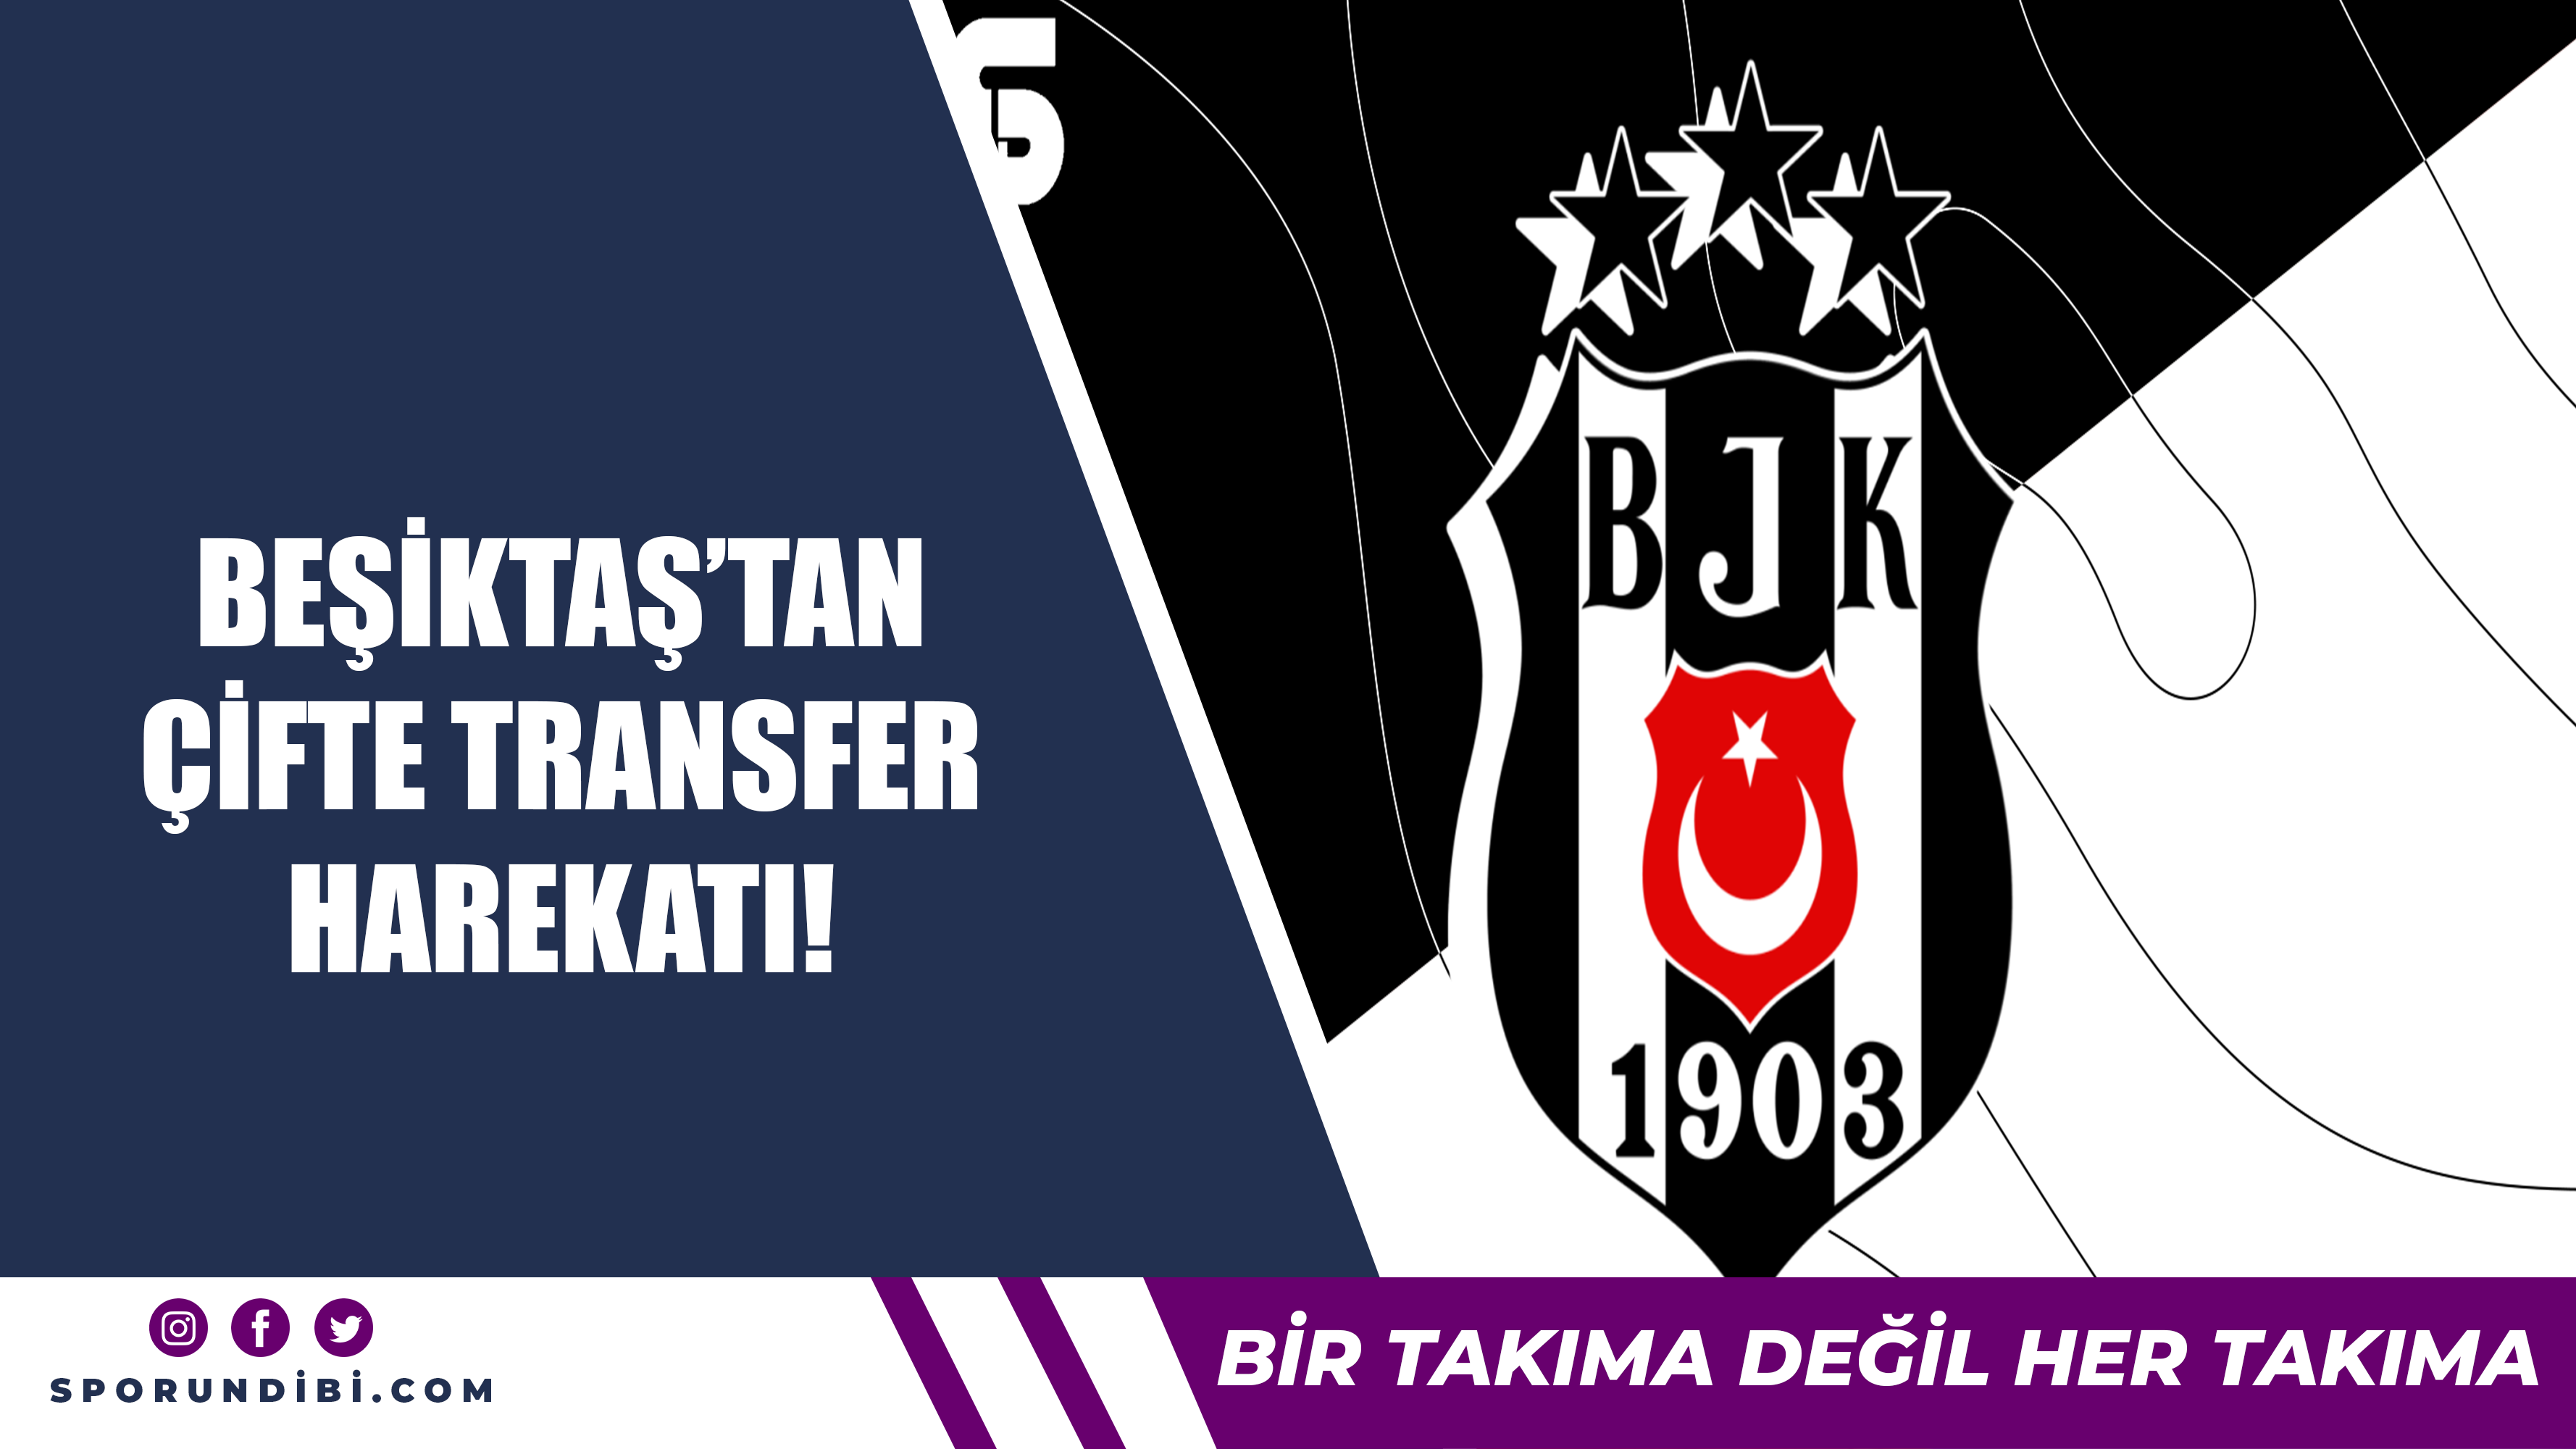 Beşiktaş'tan çifte transfer harekatı!